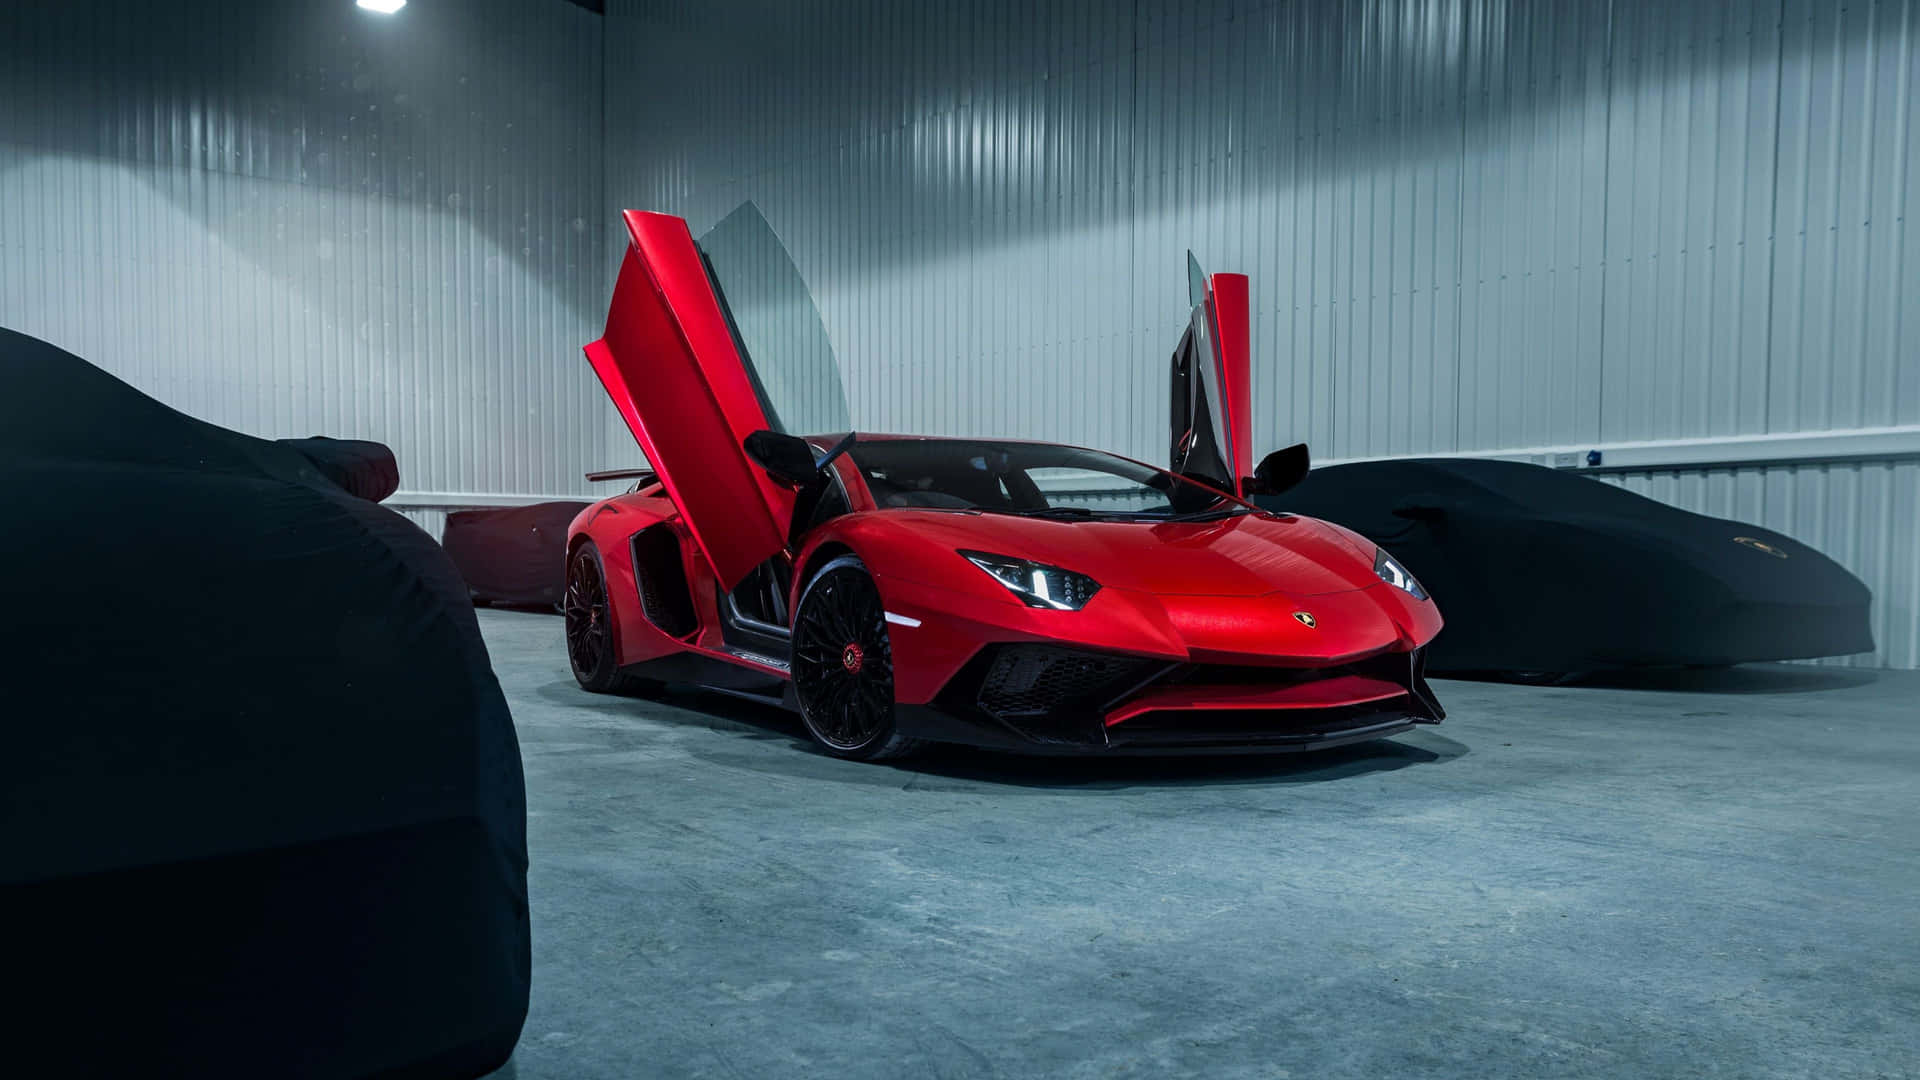 "The Ultimate Luxury: A 4K Lamborghini"